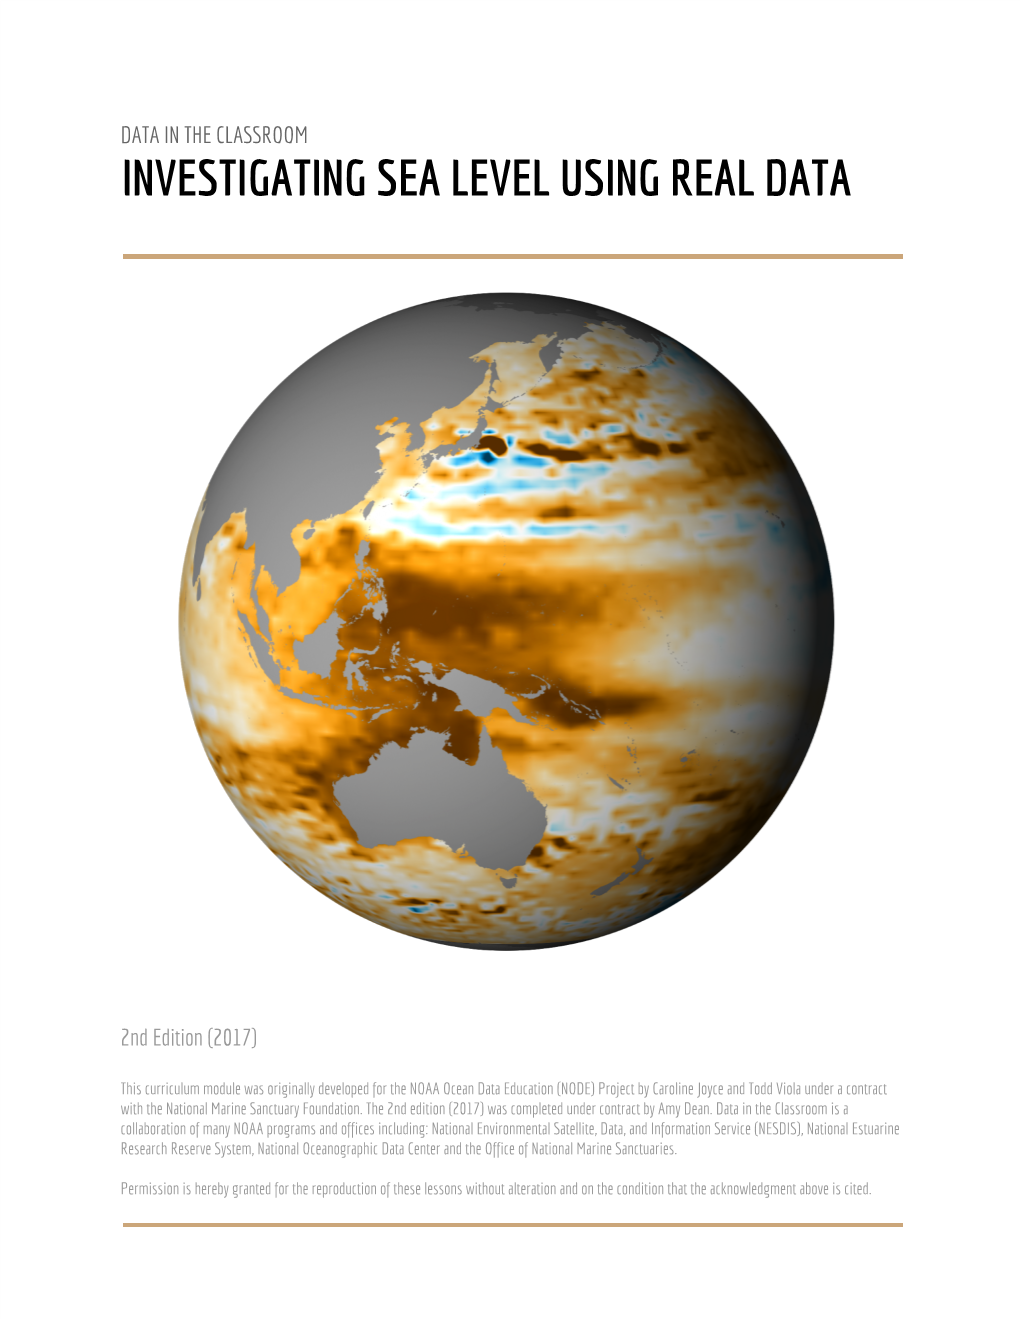 Investigating Sea Level Using Real Data